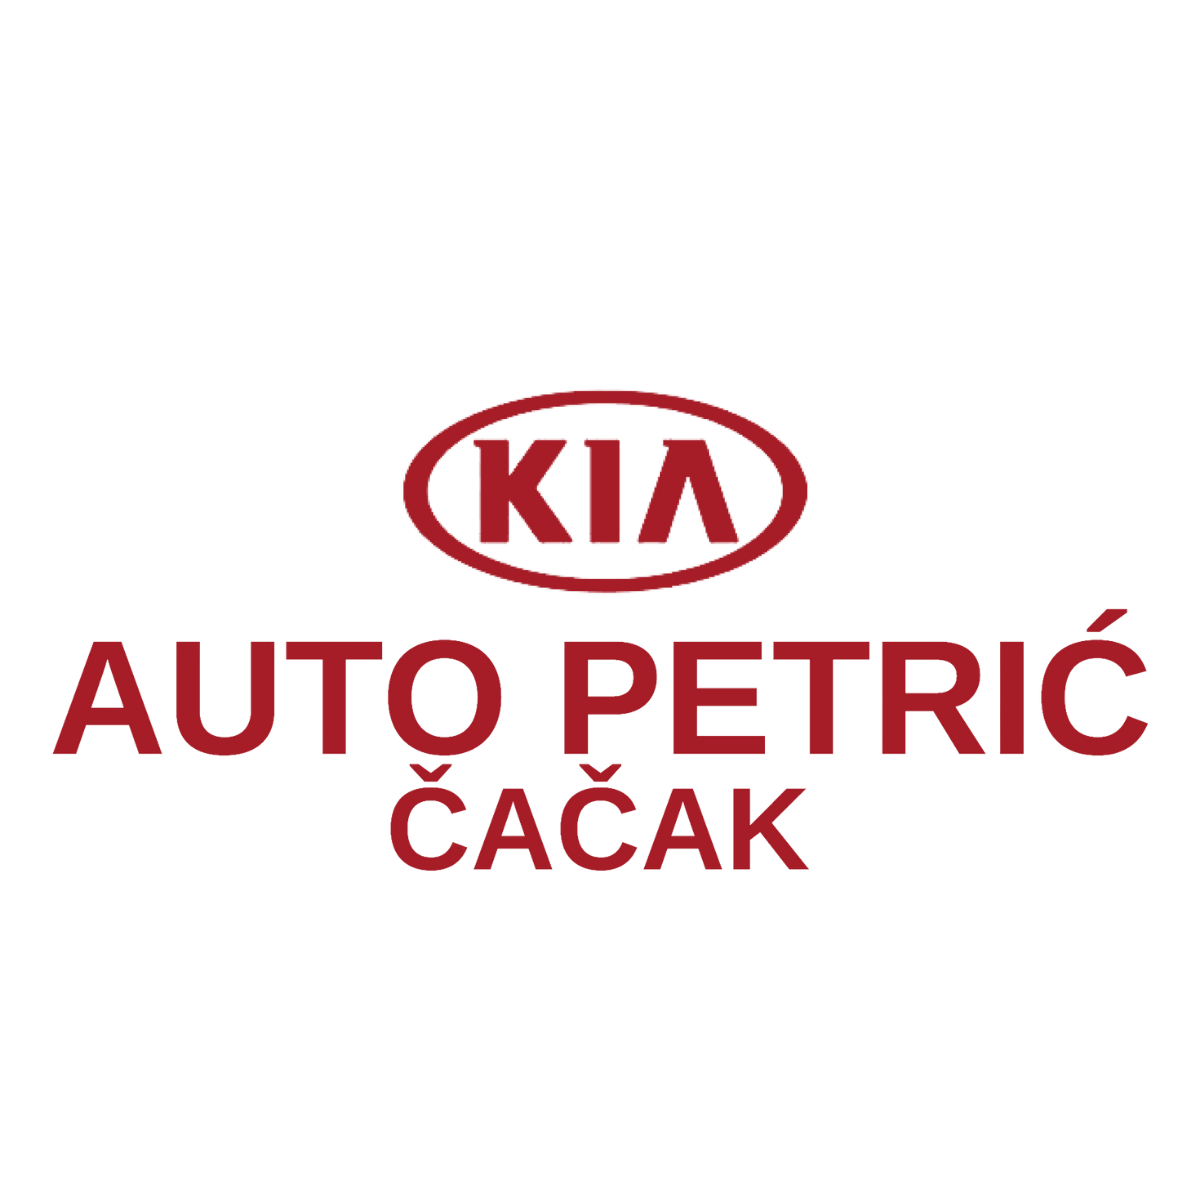 Auto Petric